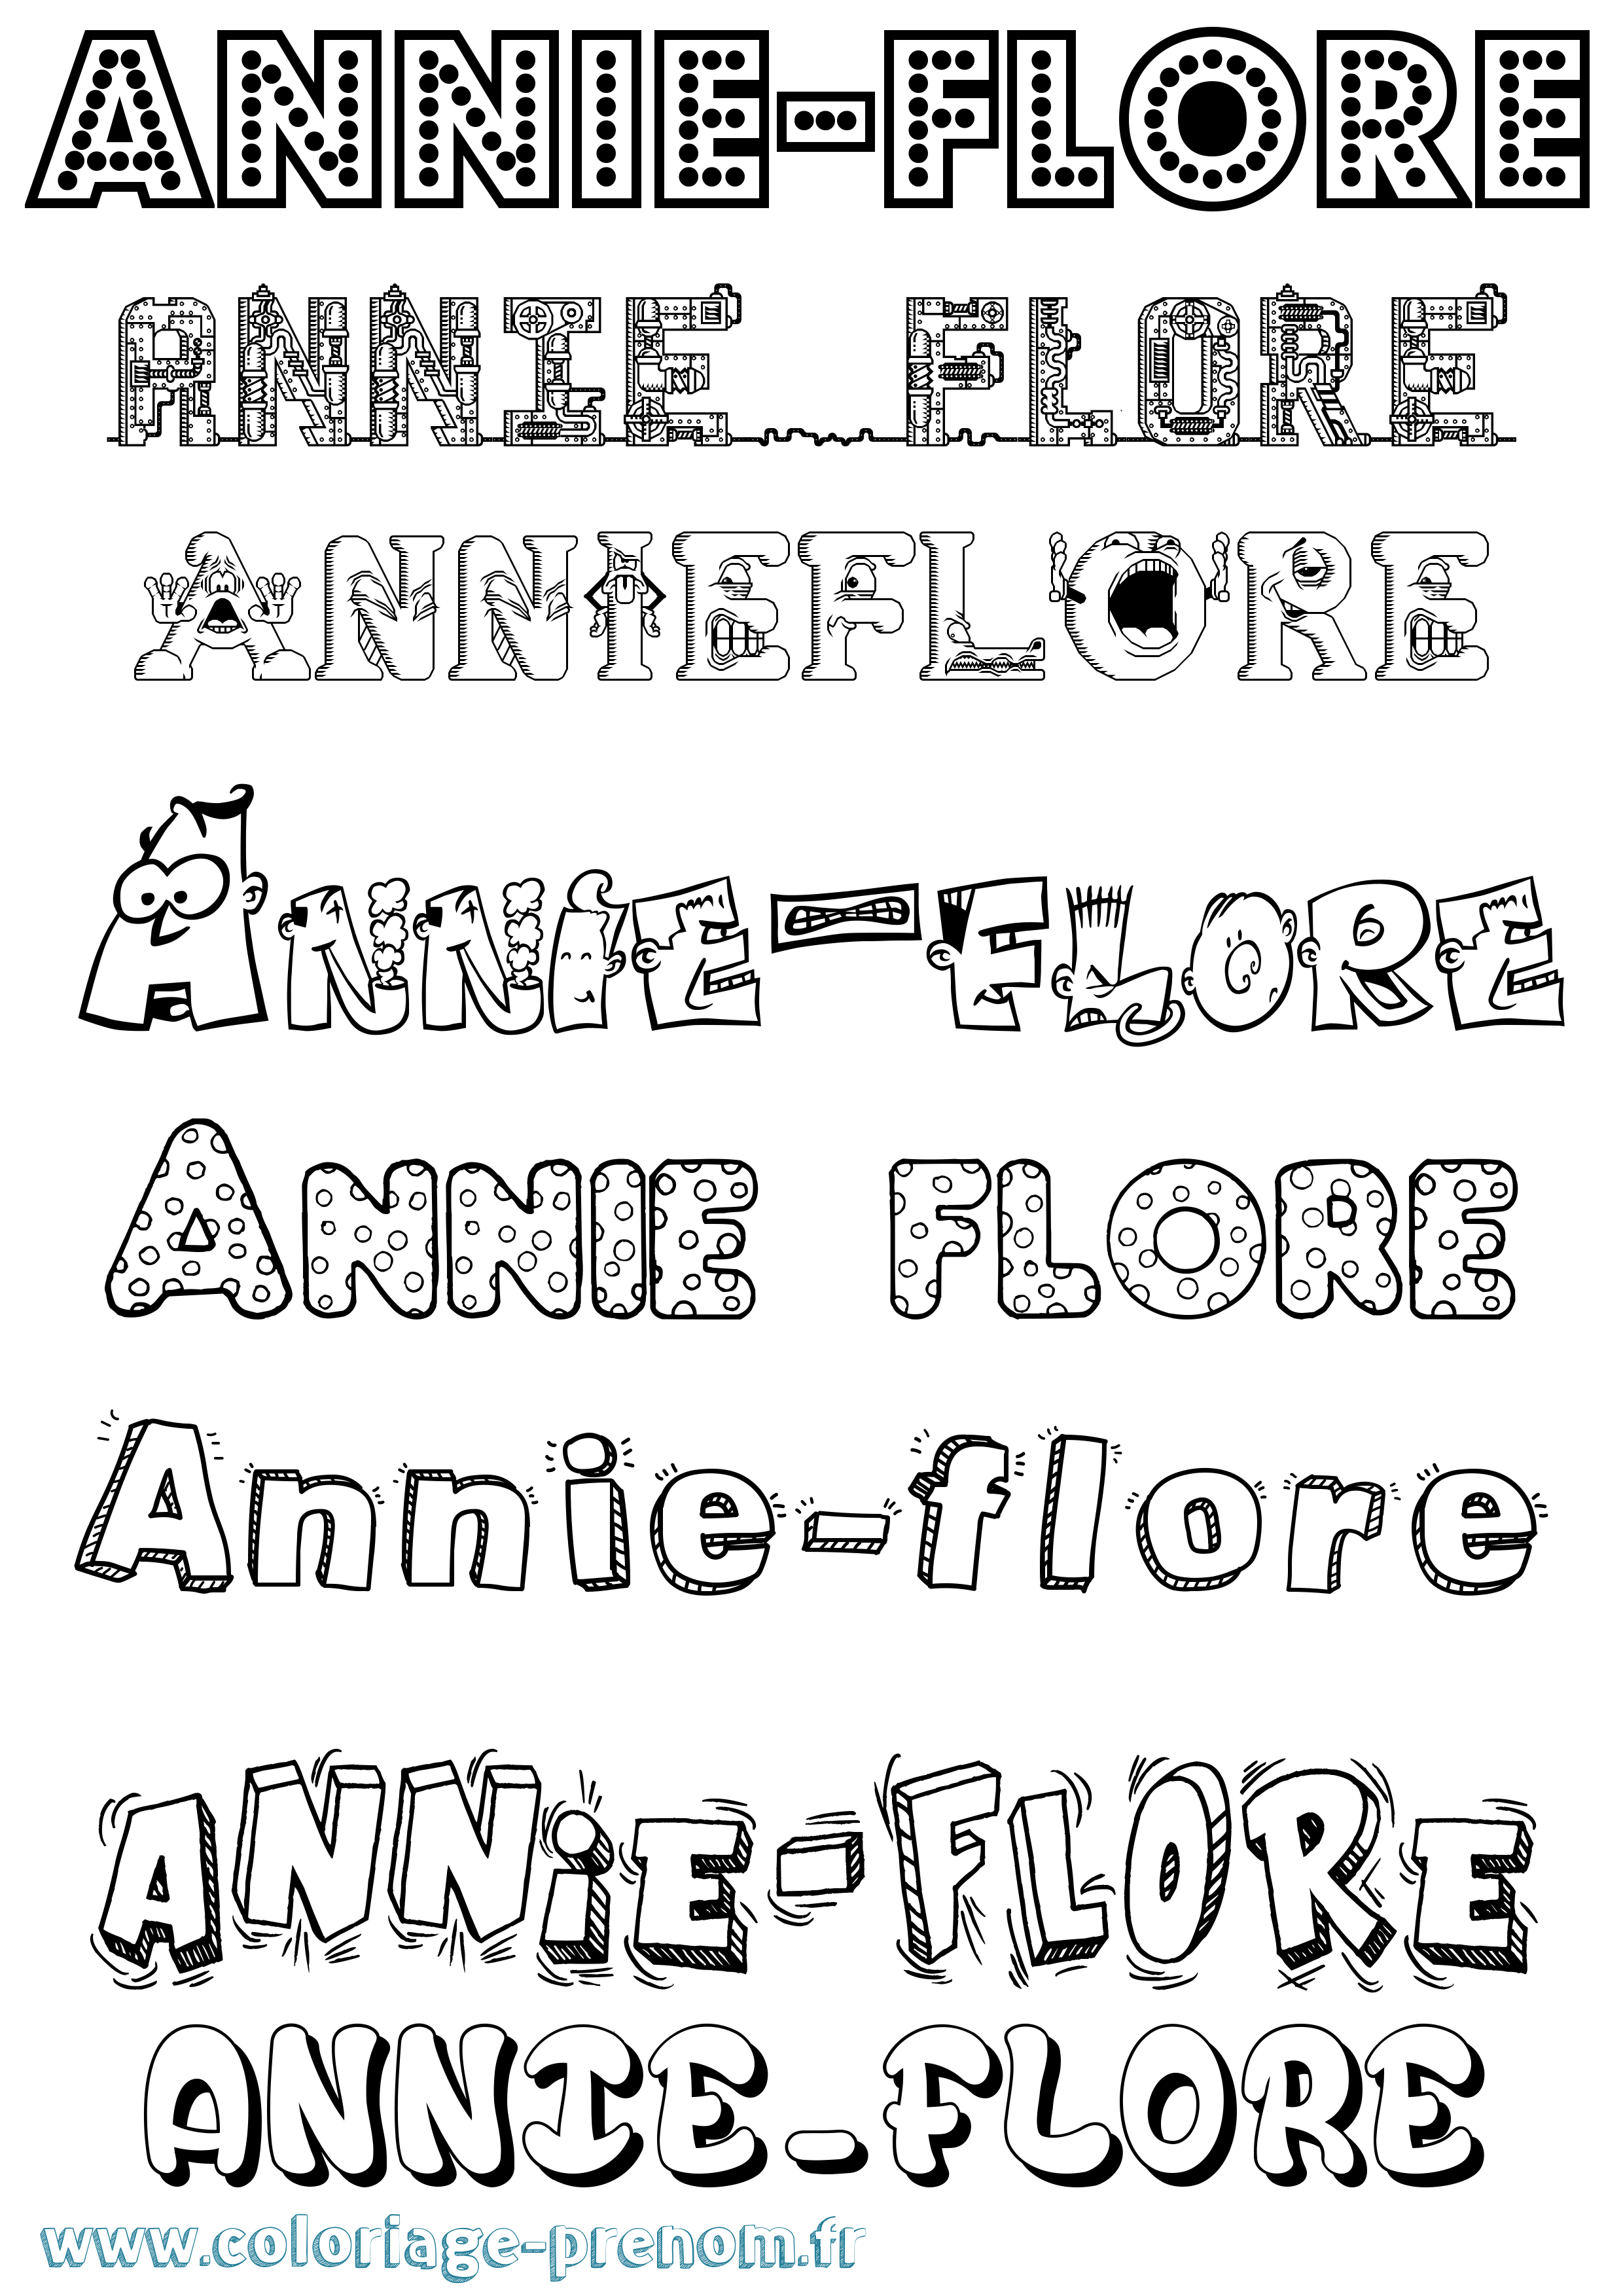 Coloriage prénom Annie-Flore Fun